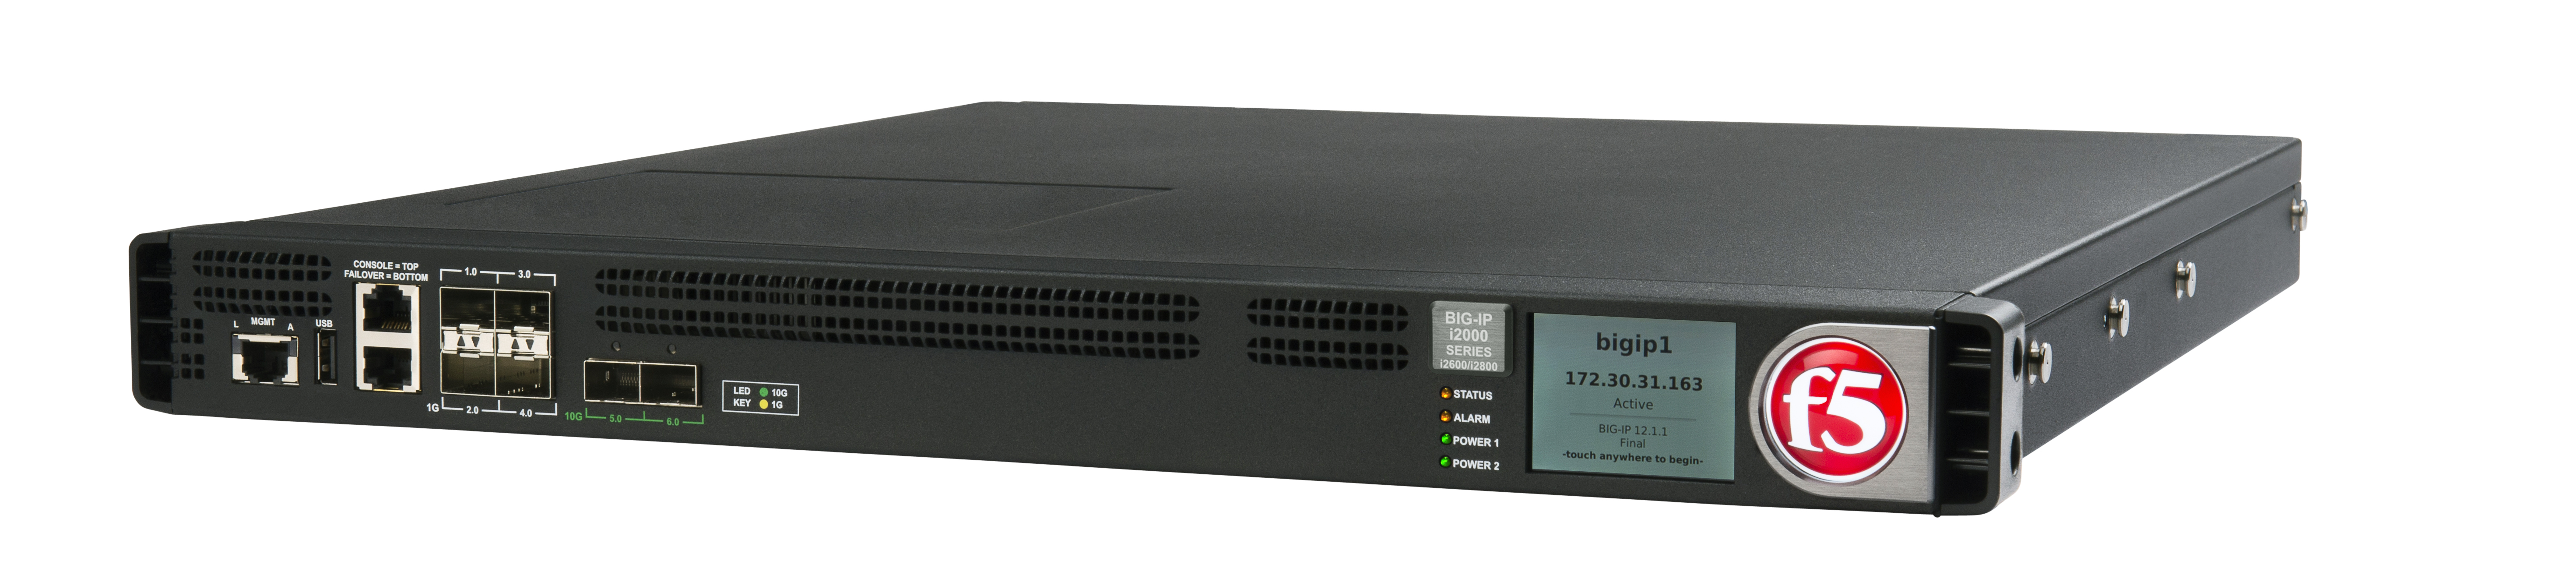 Ip 1 40. F5 big IP 11800. F5 big-IP 4000s. F5-big-LTM-4200v. Сетевое оборудование f5-big-LTM-i2600 big-IP i2600.